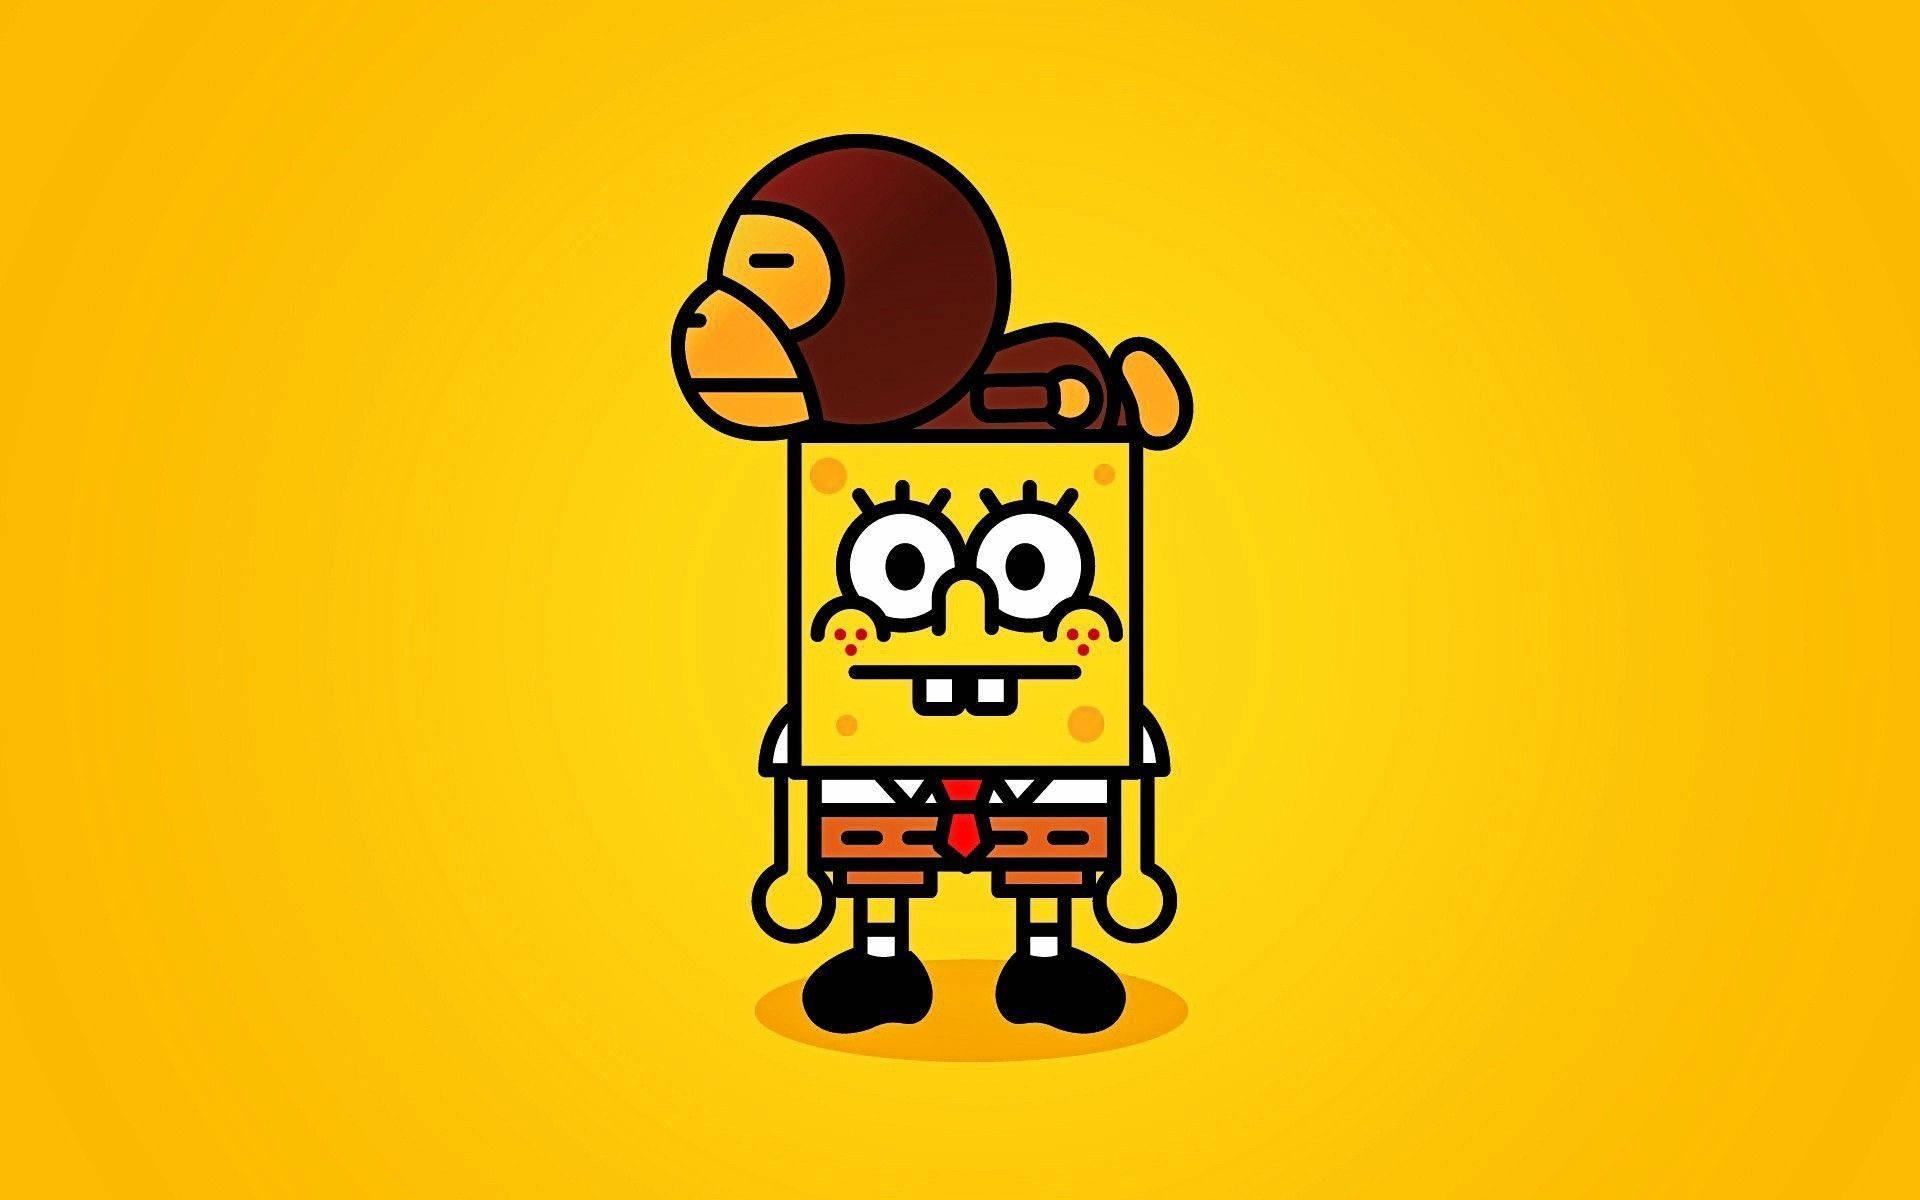 Spongebob With Funny Monkey Background